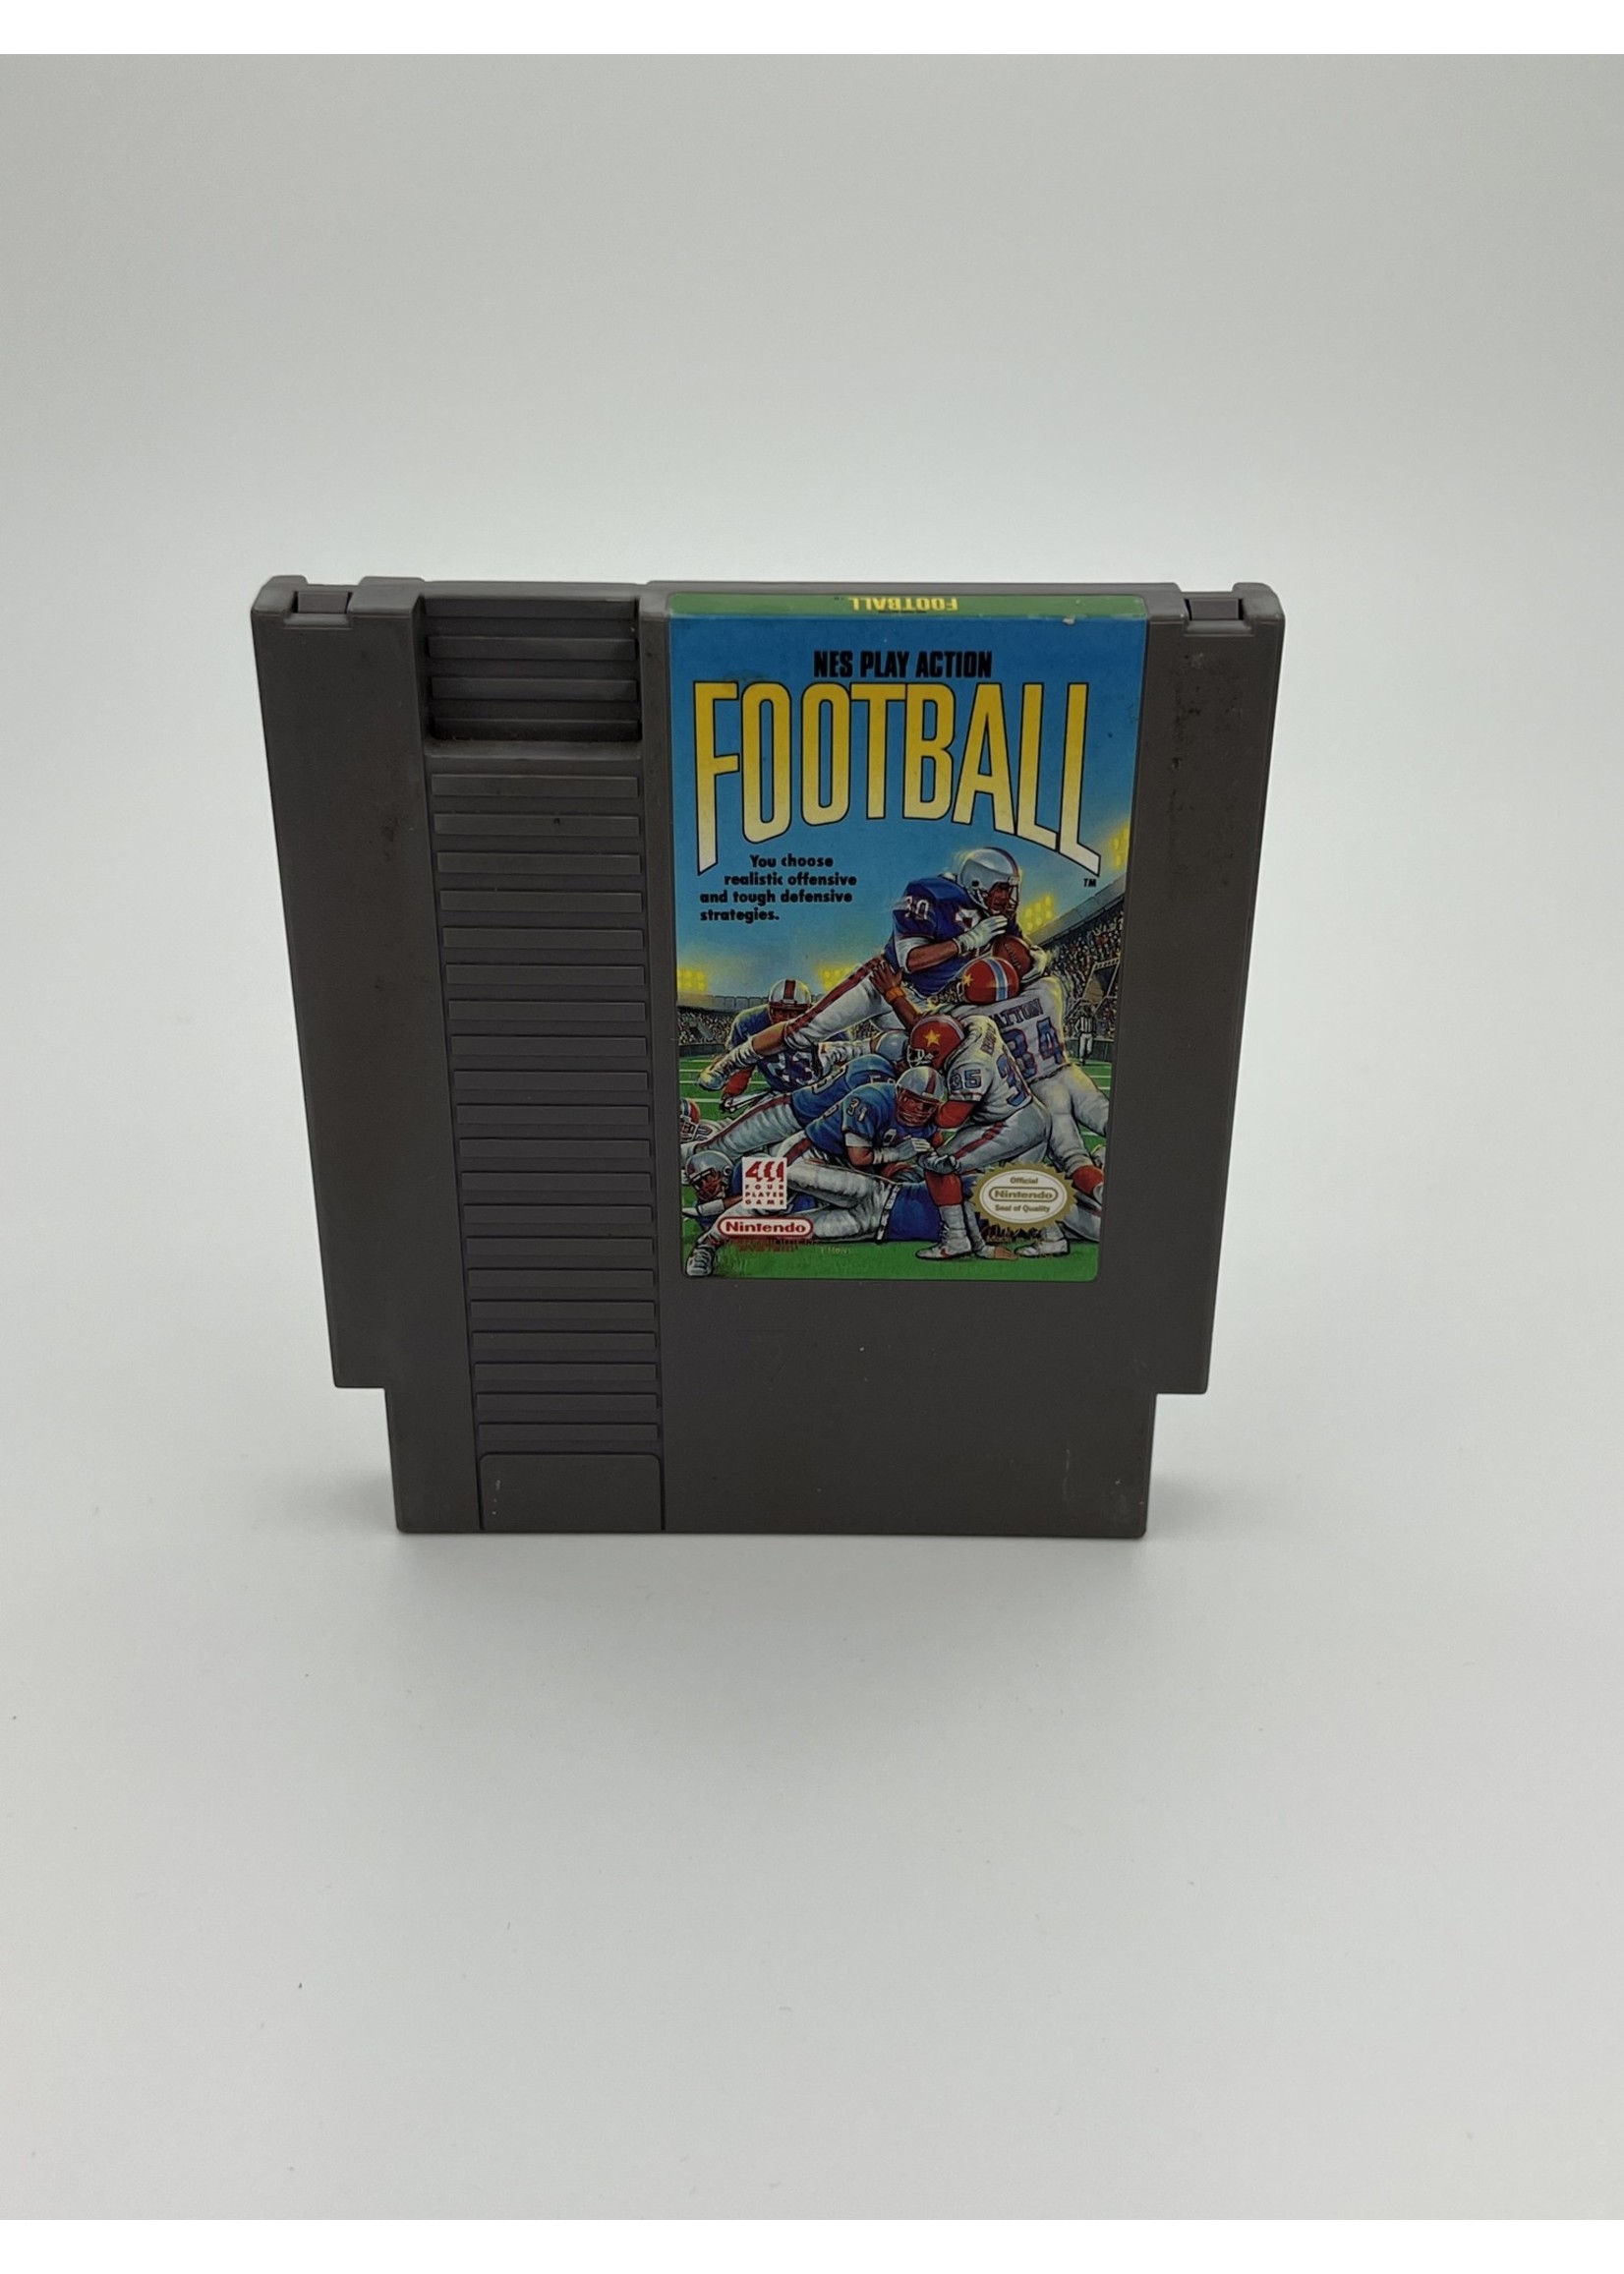 Nintendo Nes Play Action Football Nes